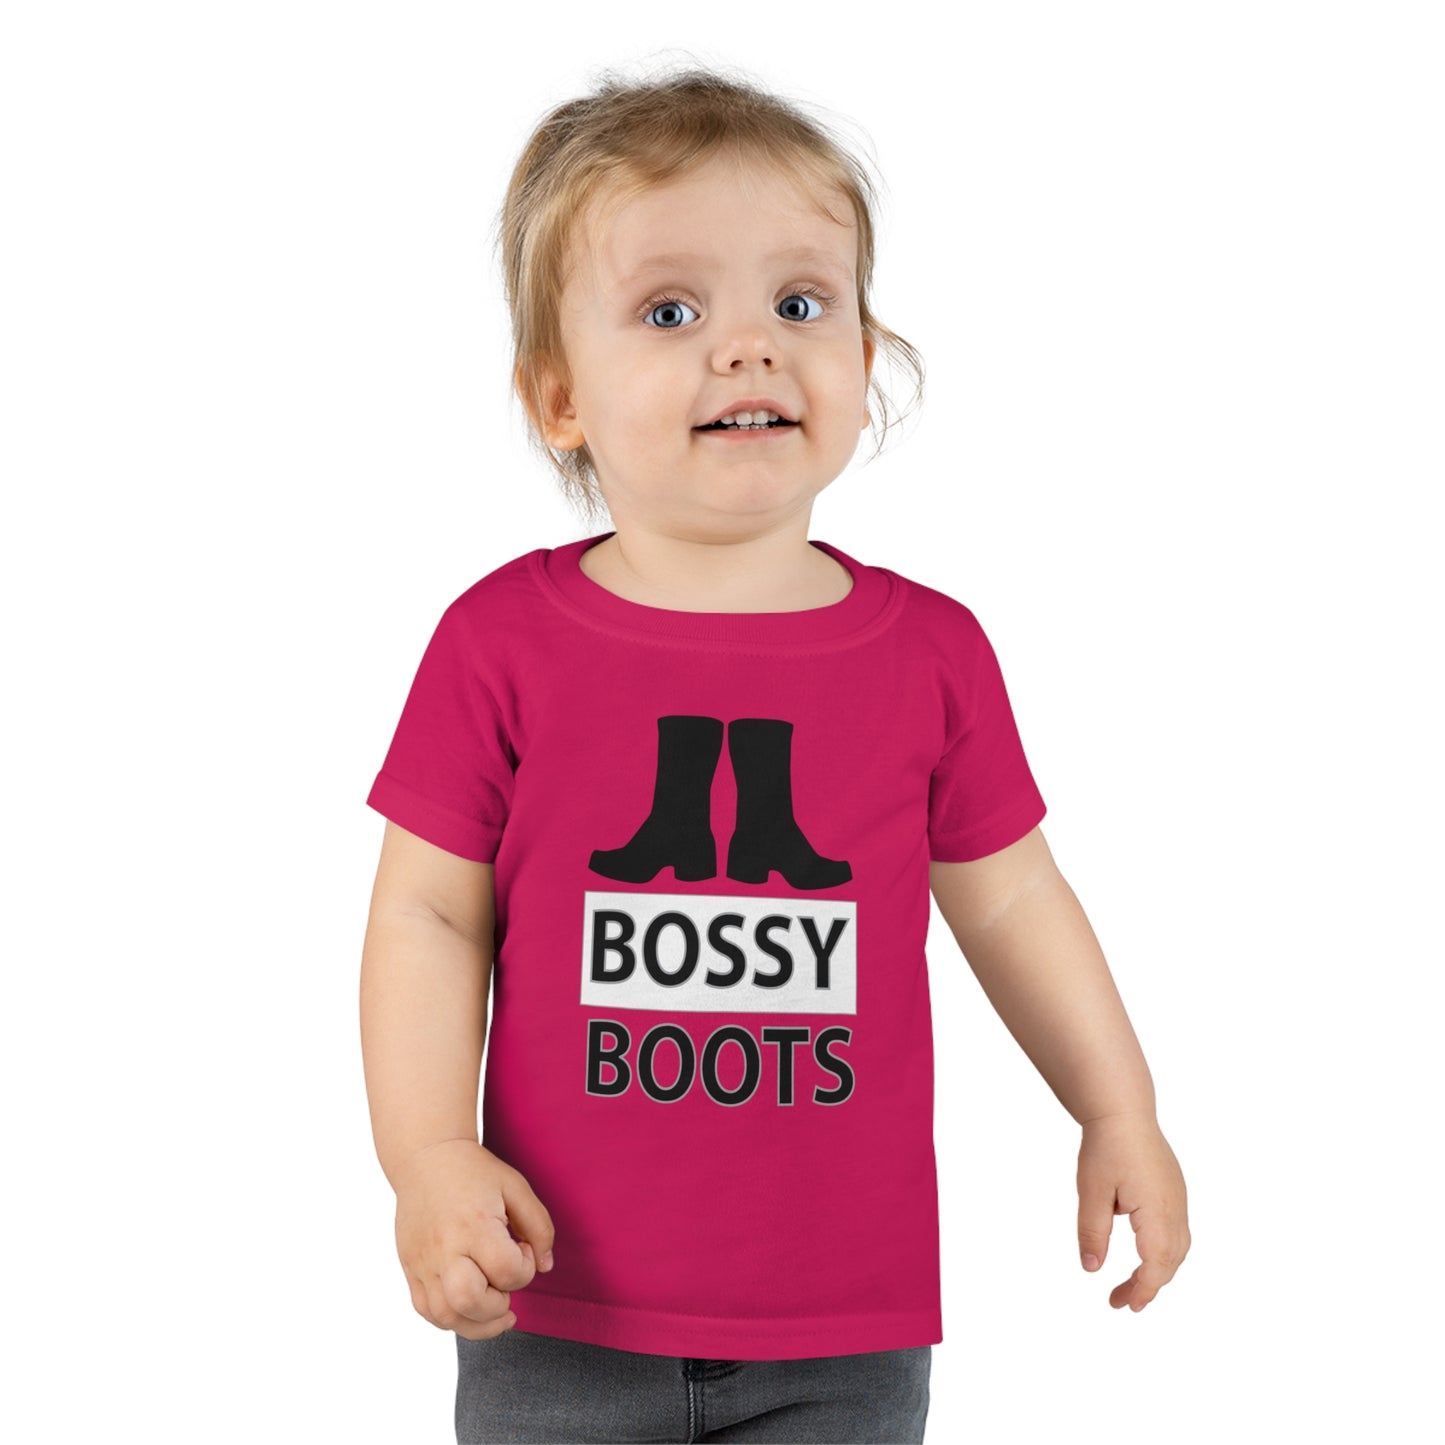 Bossy boots T-shirt